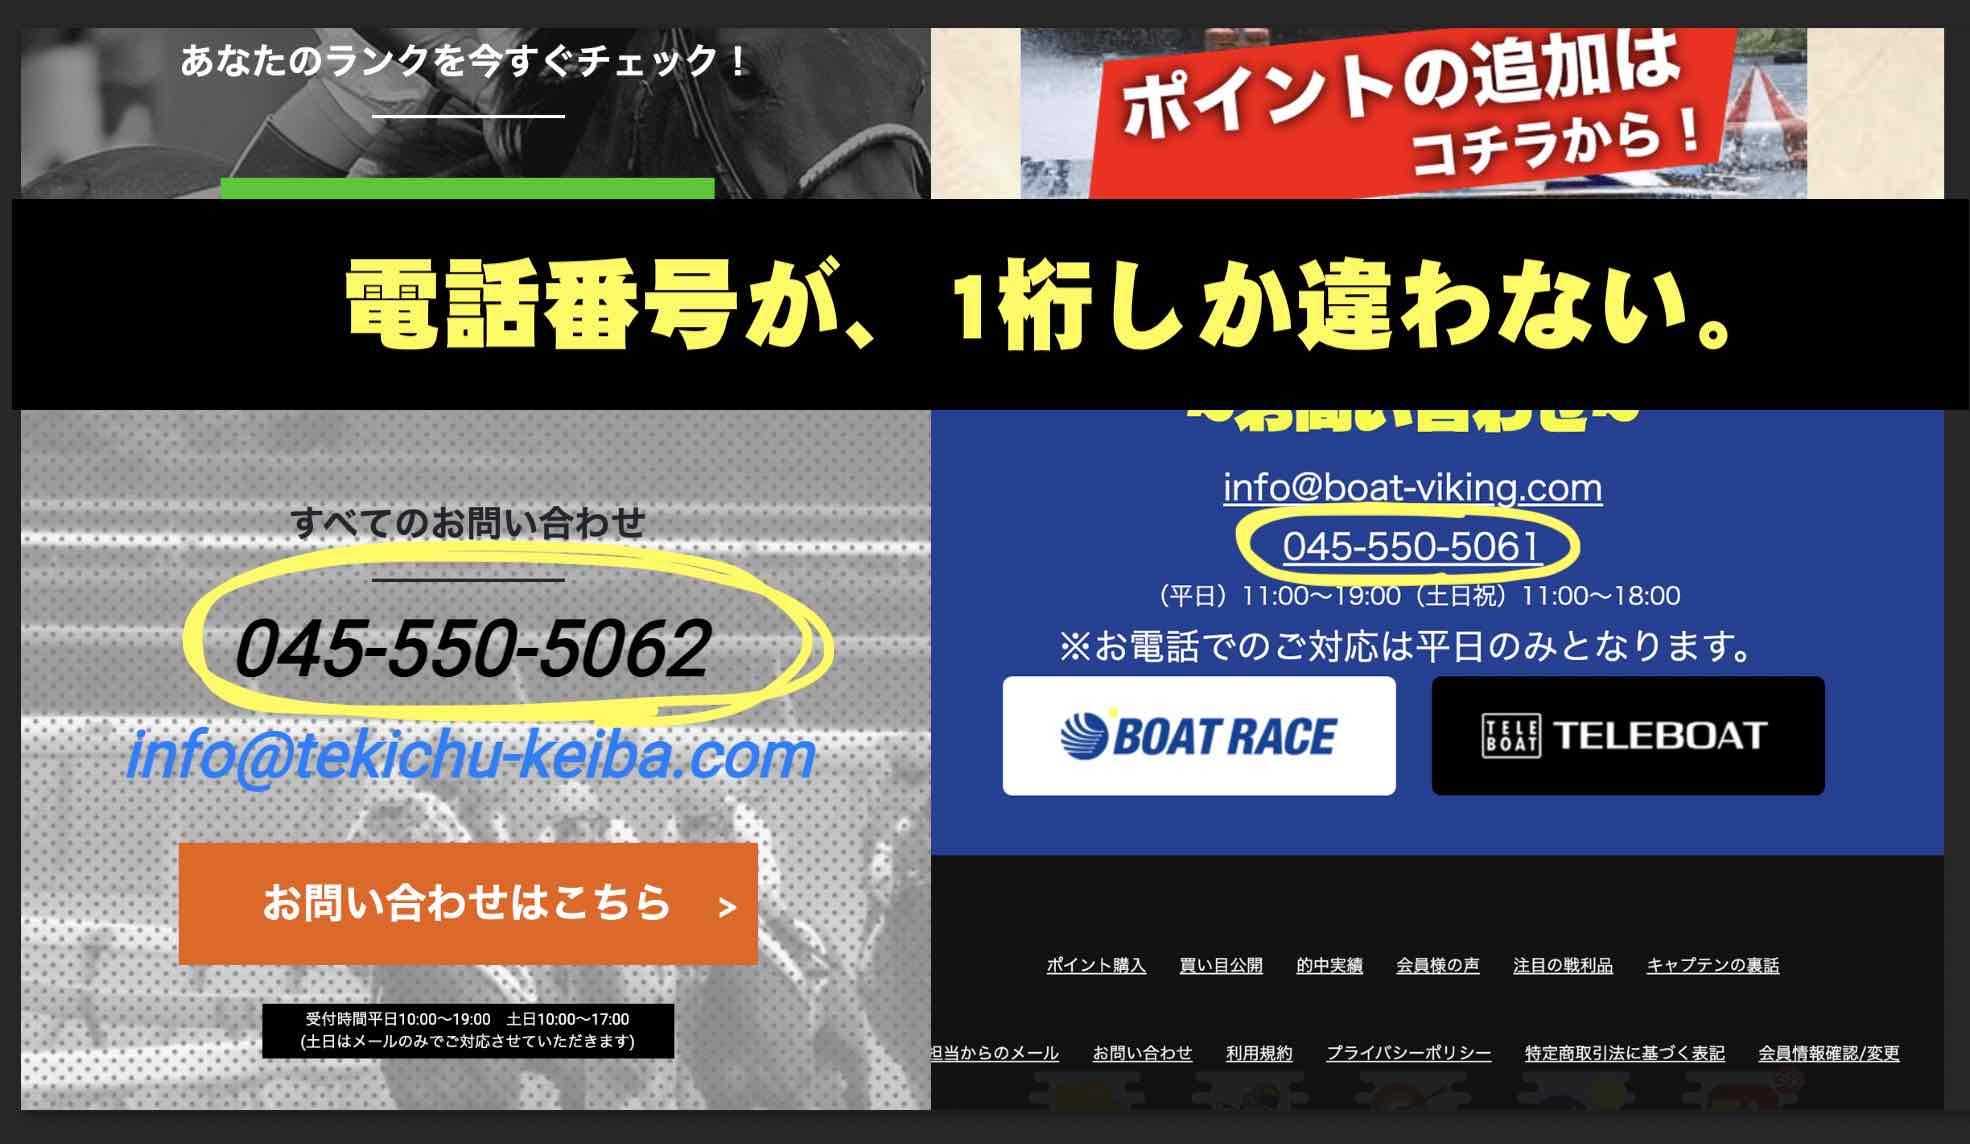 HANAMICHI(ハナミチ)という競馬予想サイトの電話番号がほぼ同じ